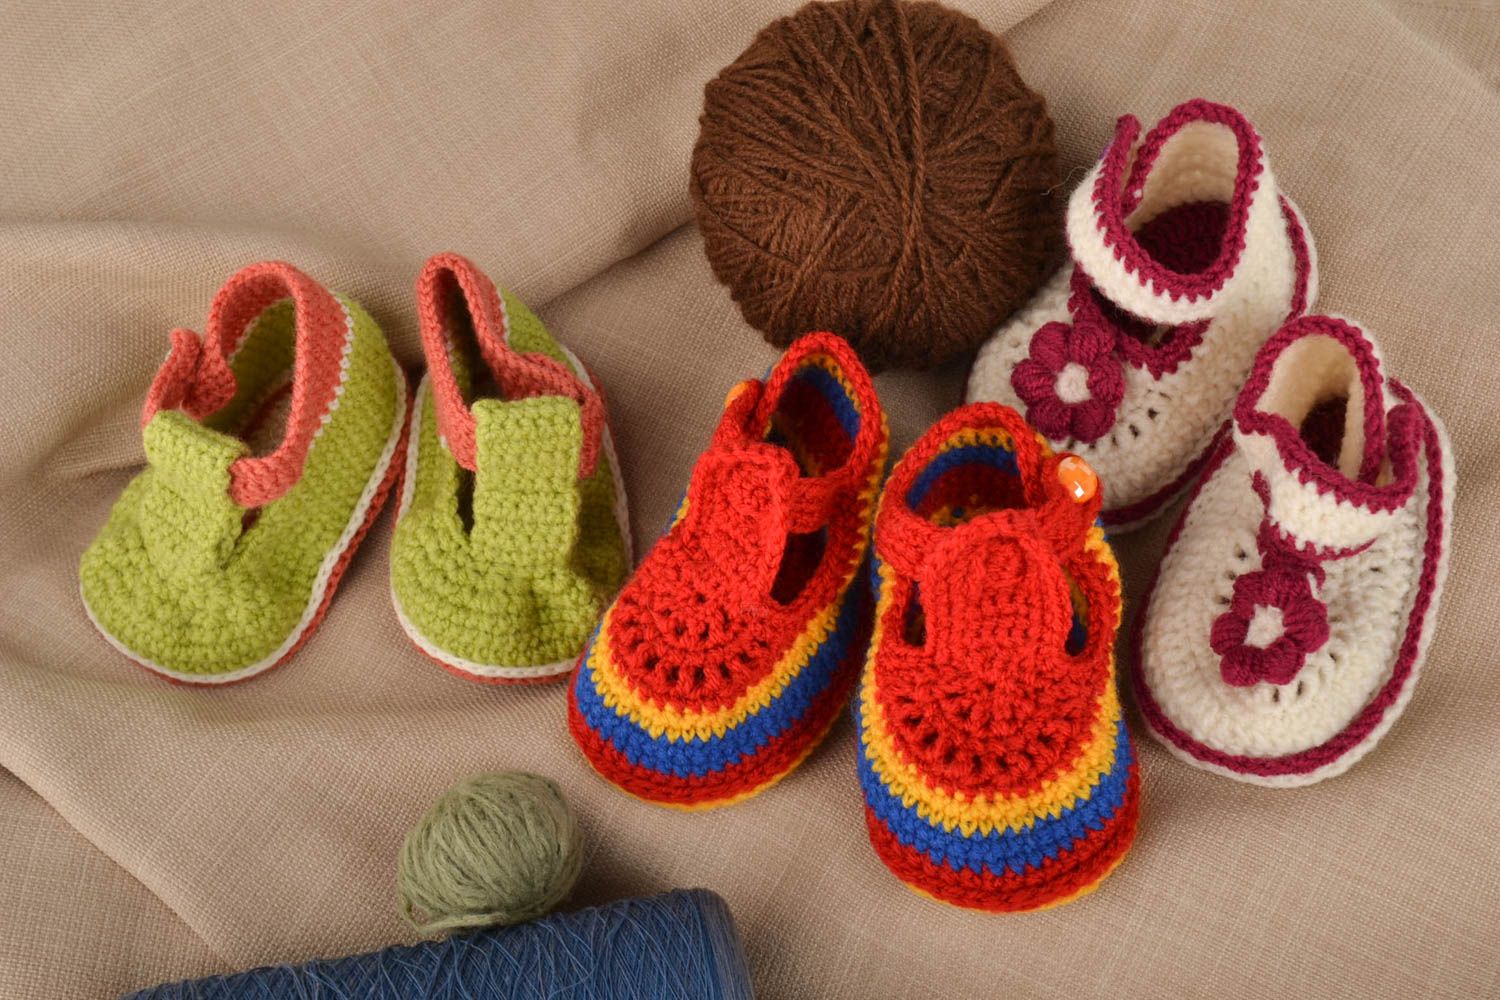 Beautiful handmade baby bootees crochet baby booties fashion kids small gifts photo 1